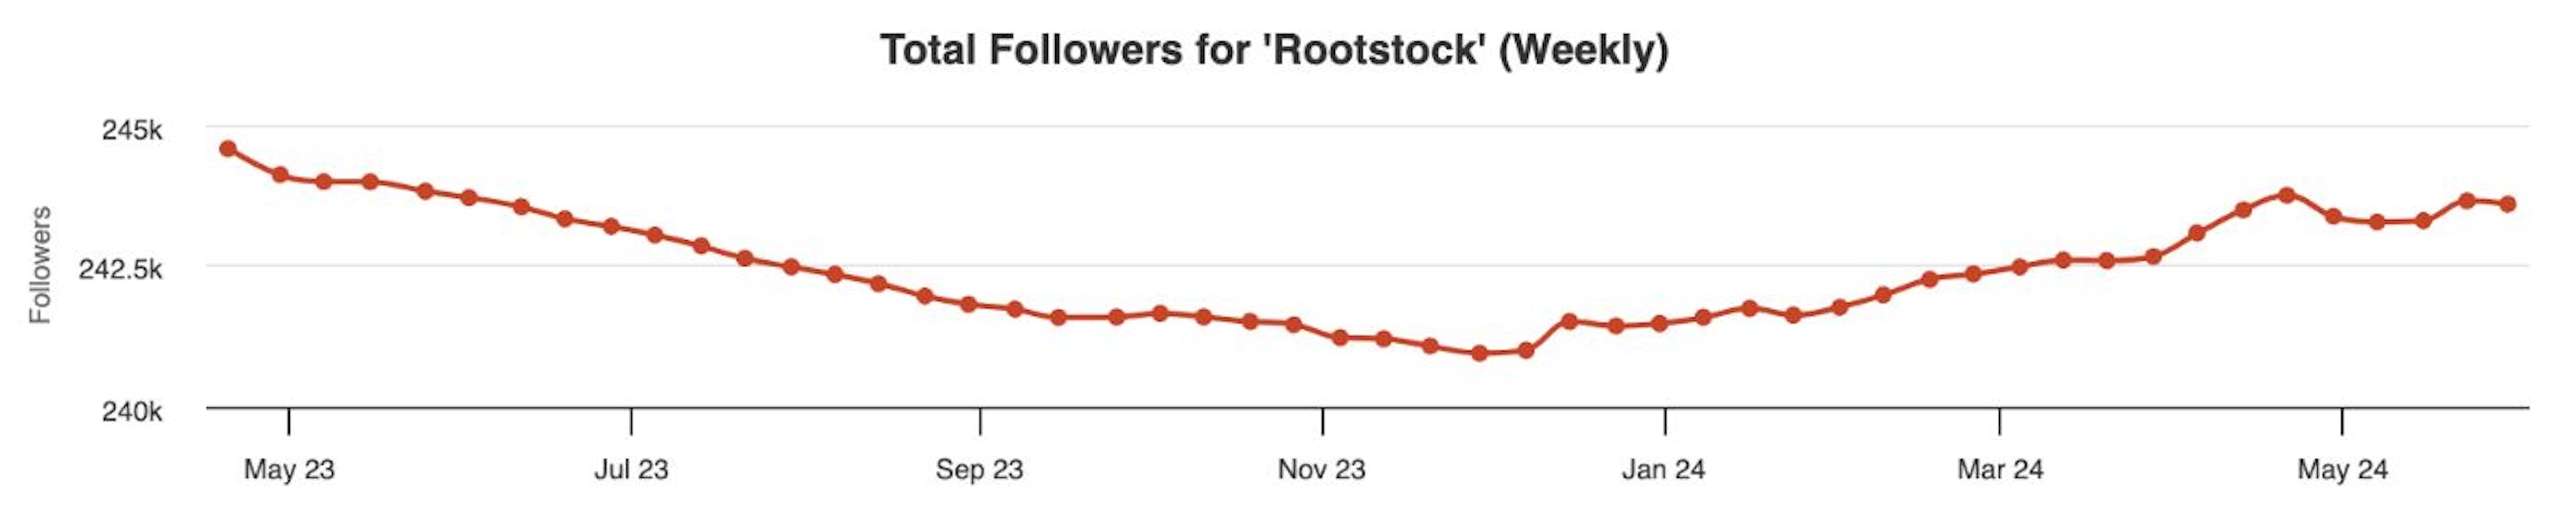 Dynamik der Rootstock-Twitter-Follower